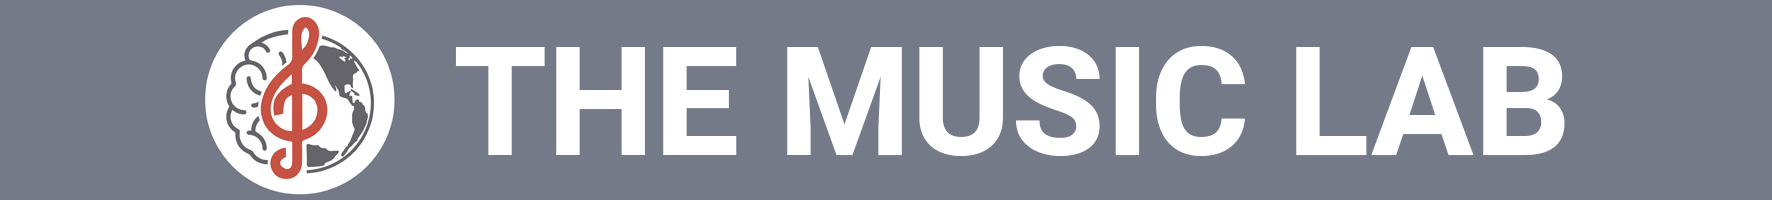 The Music Lab Logo